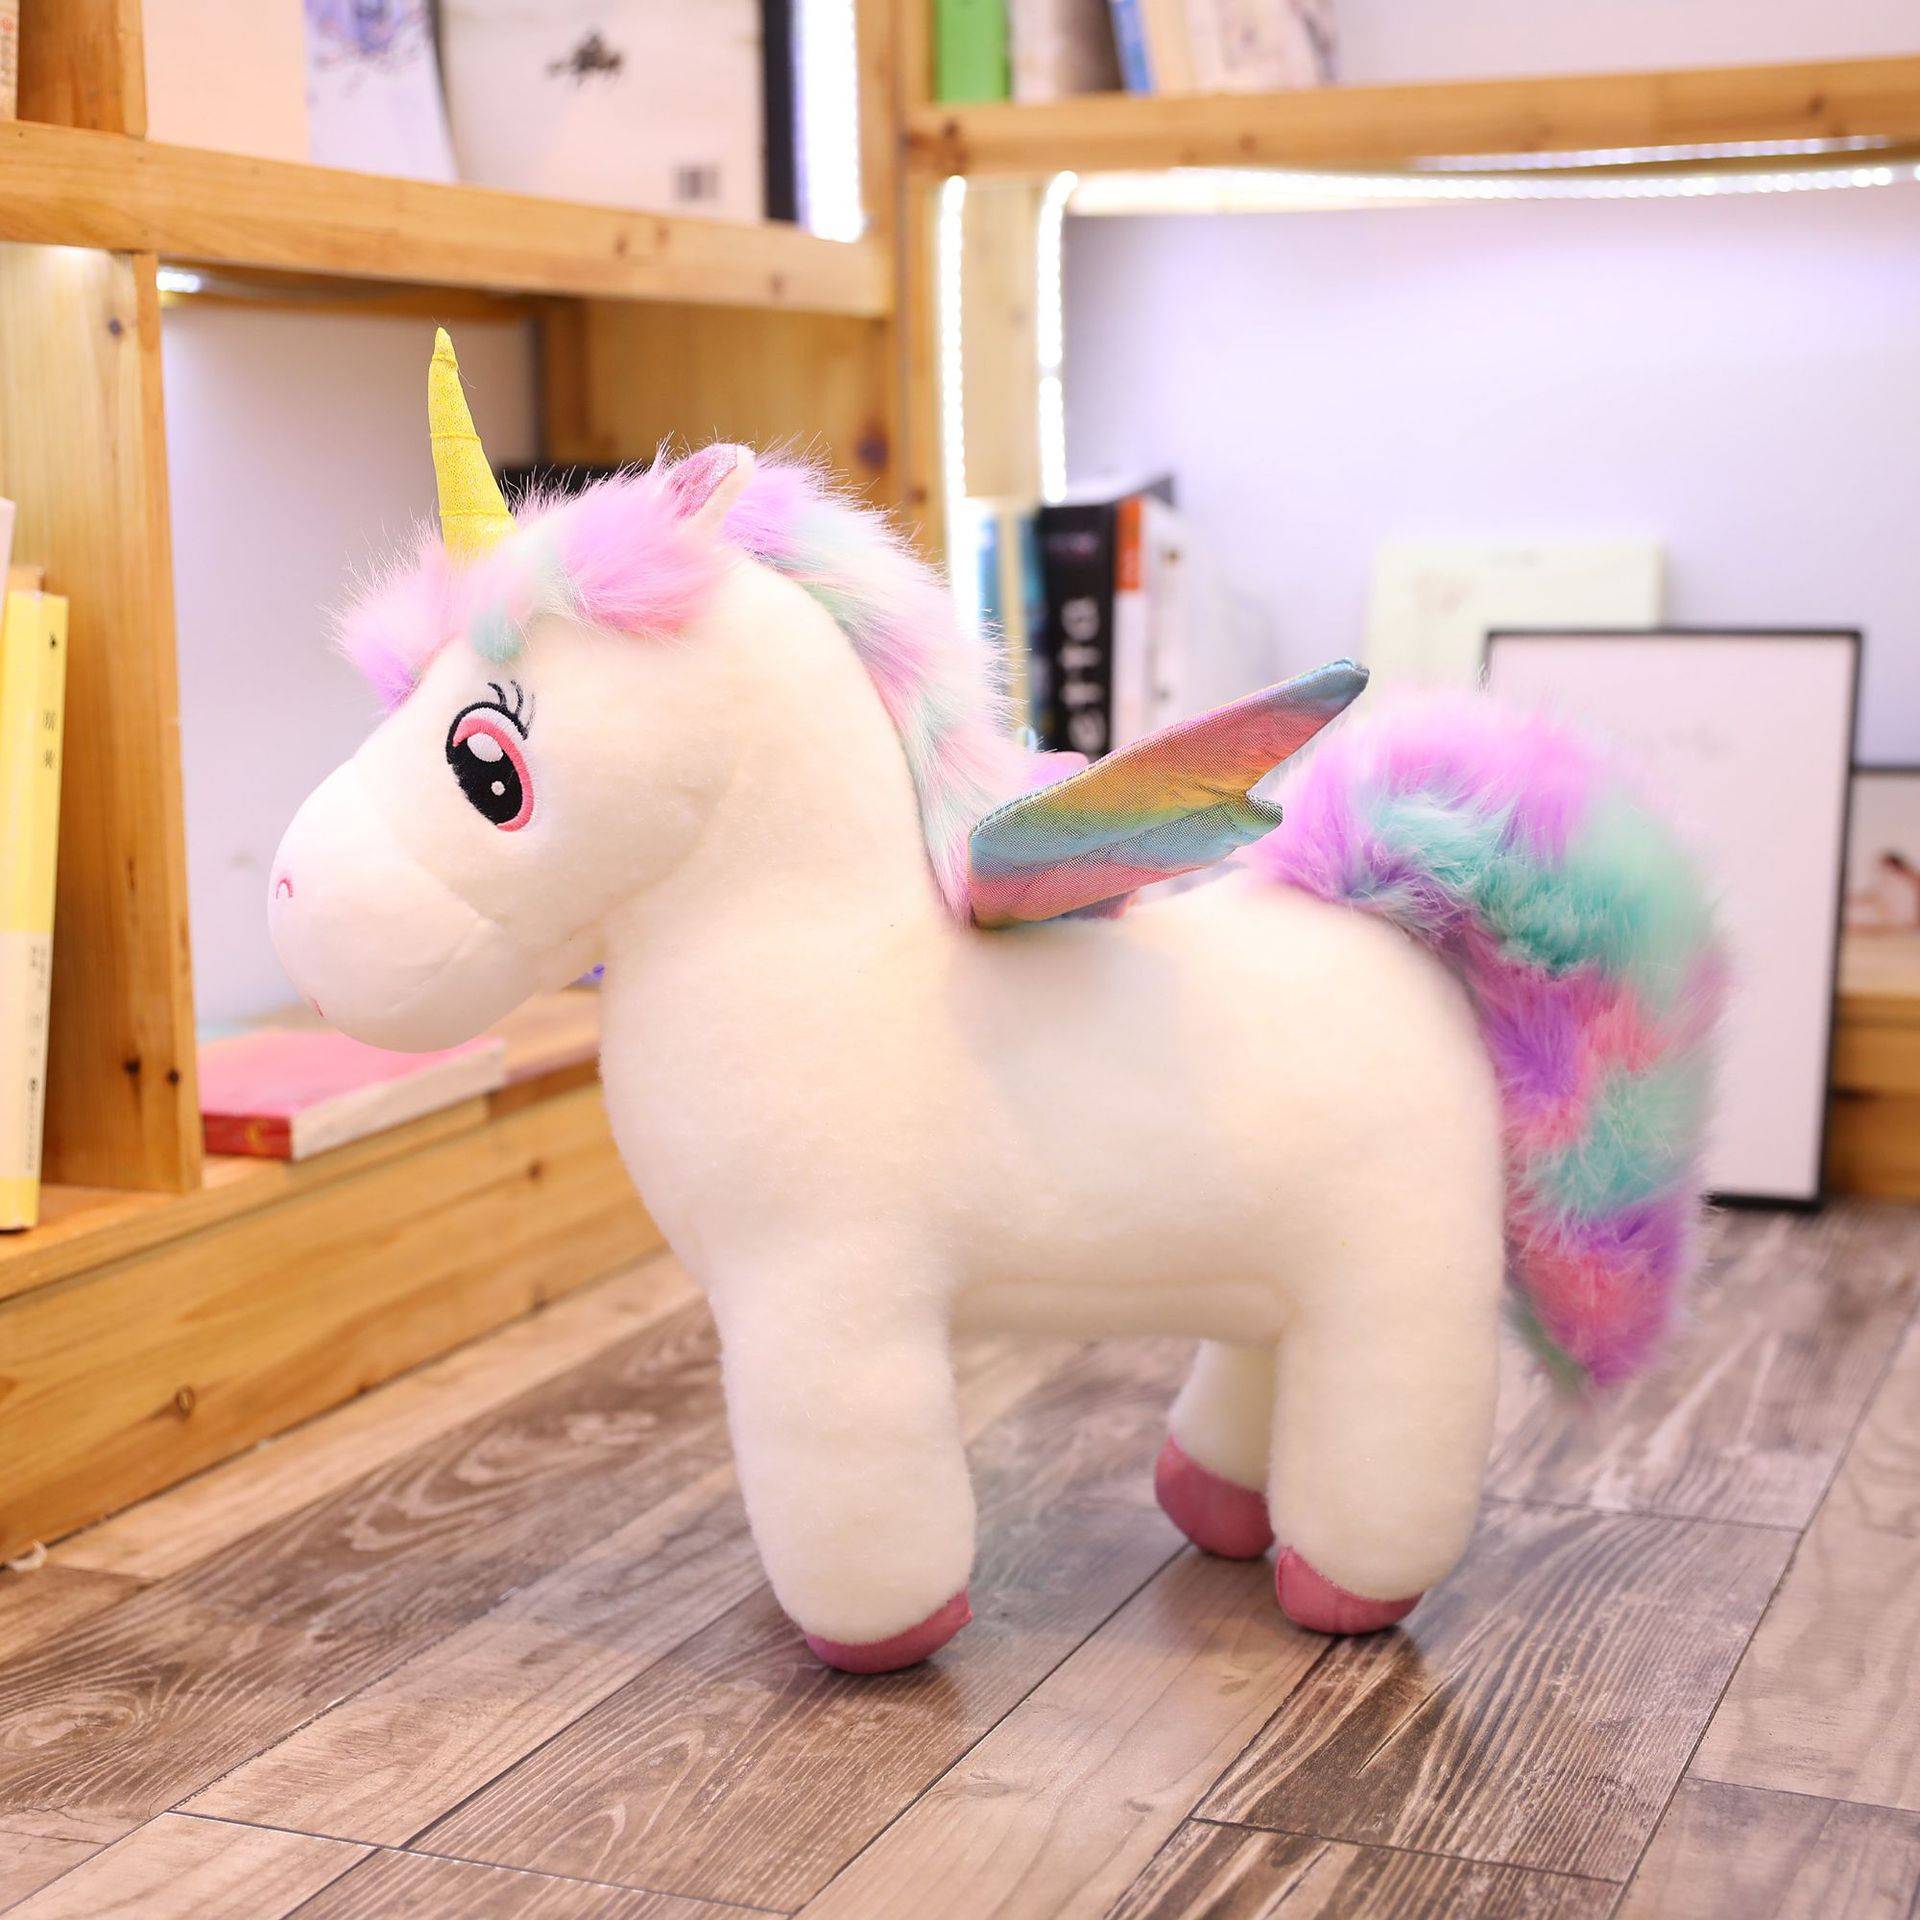 Giant Rainbow Unicorn Stuffed Animal – Blue/Pink/White Fluffy Hair Horse Plush Toys For Children